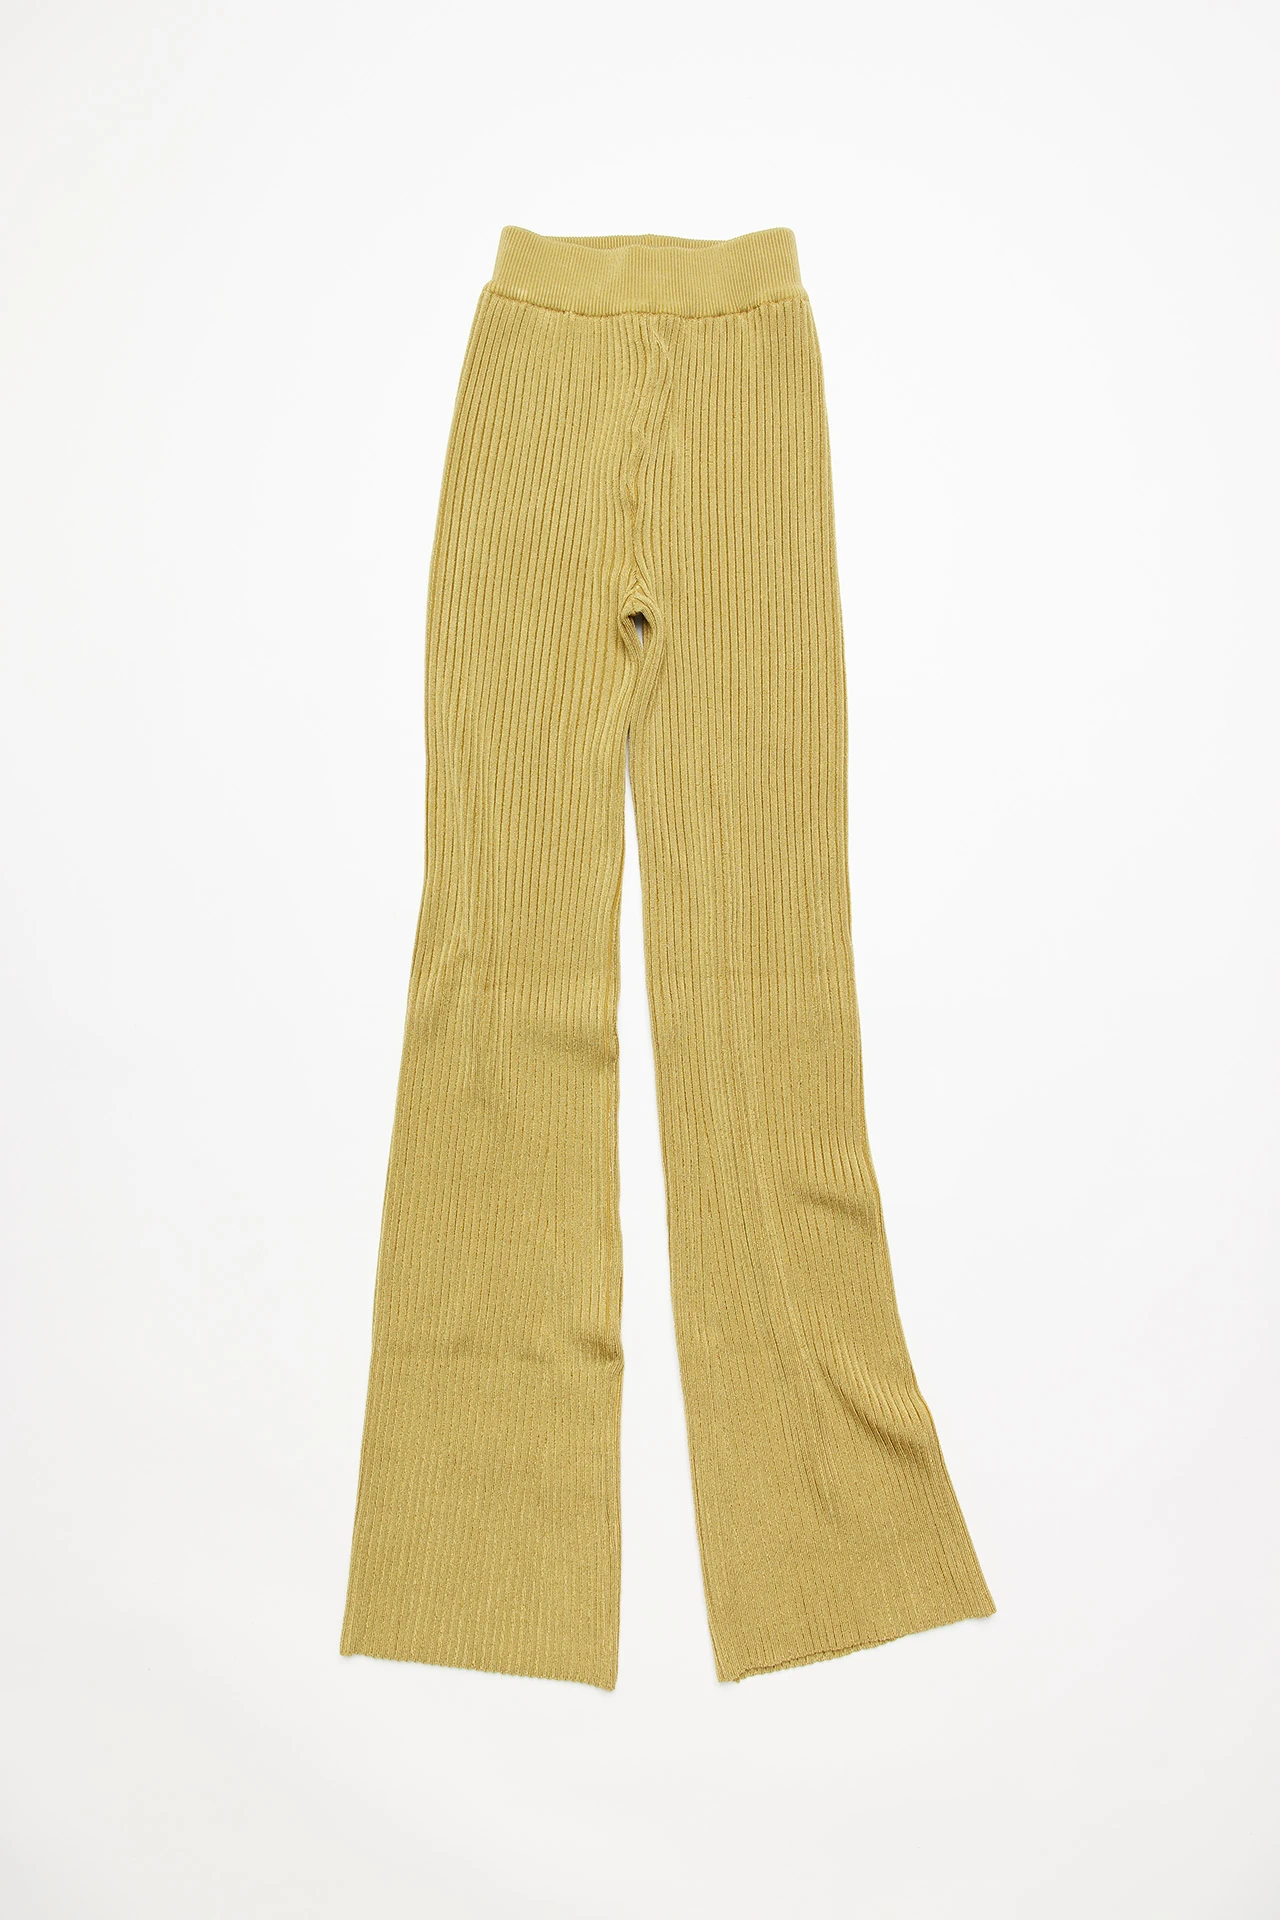 miista-birgit-chartreuse-green-trousers-01